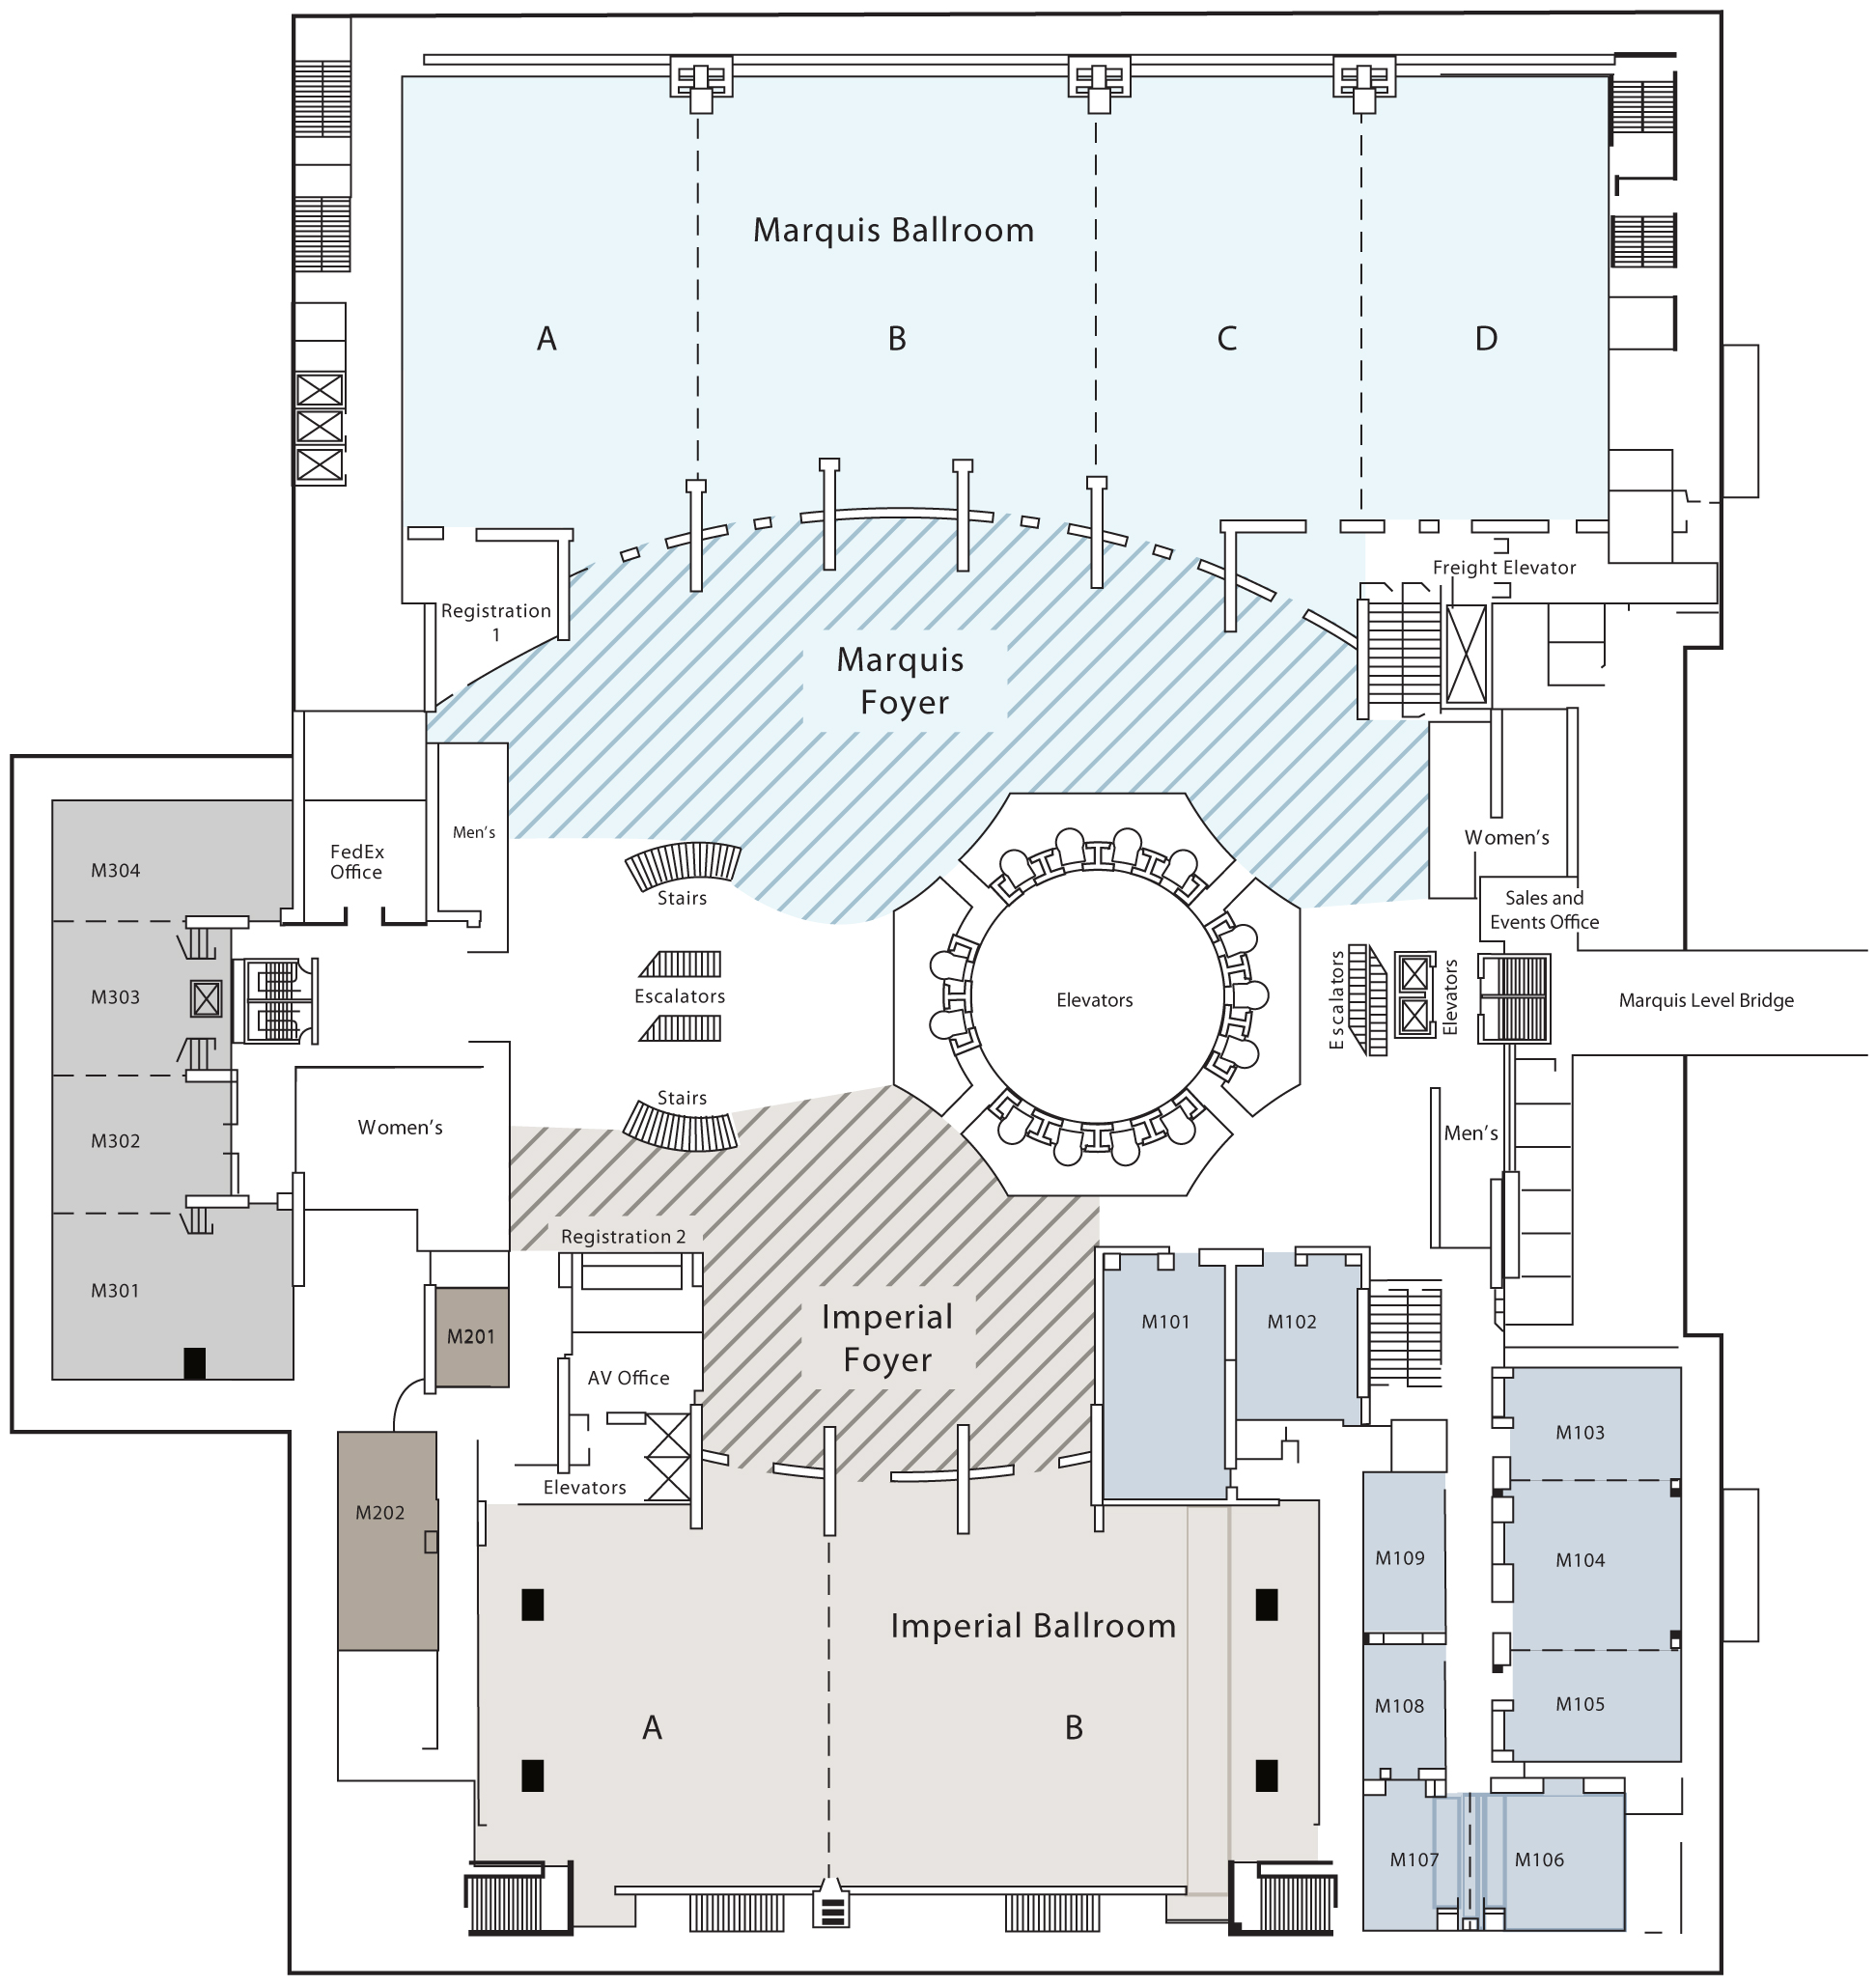 Atlanta Marriott Marquis Floor Plan